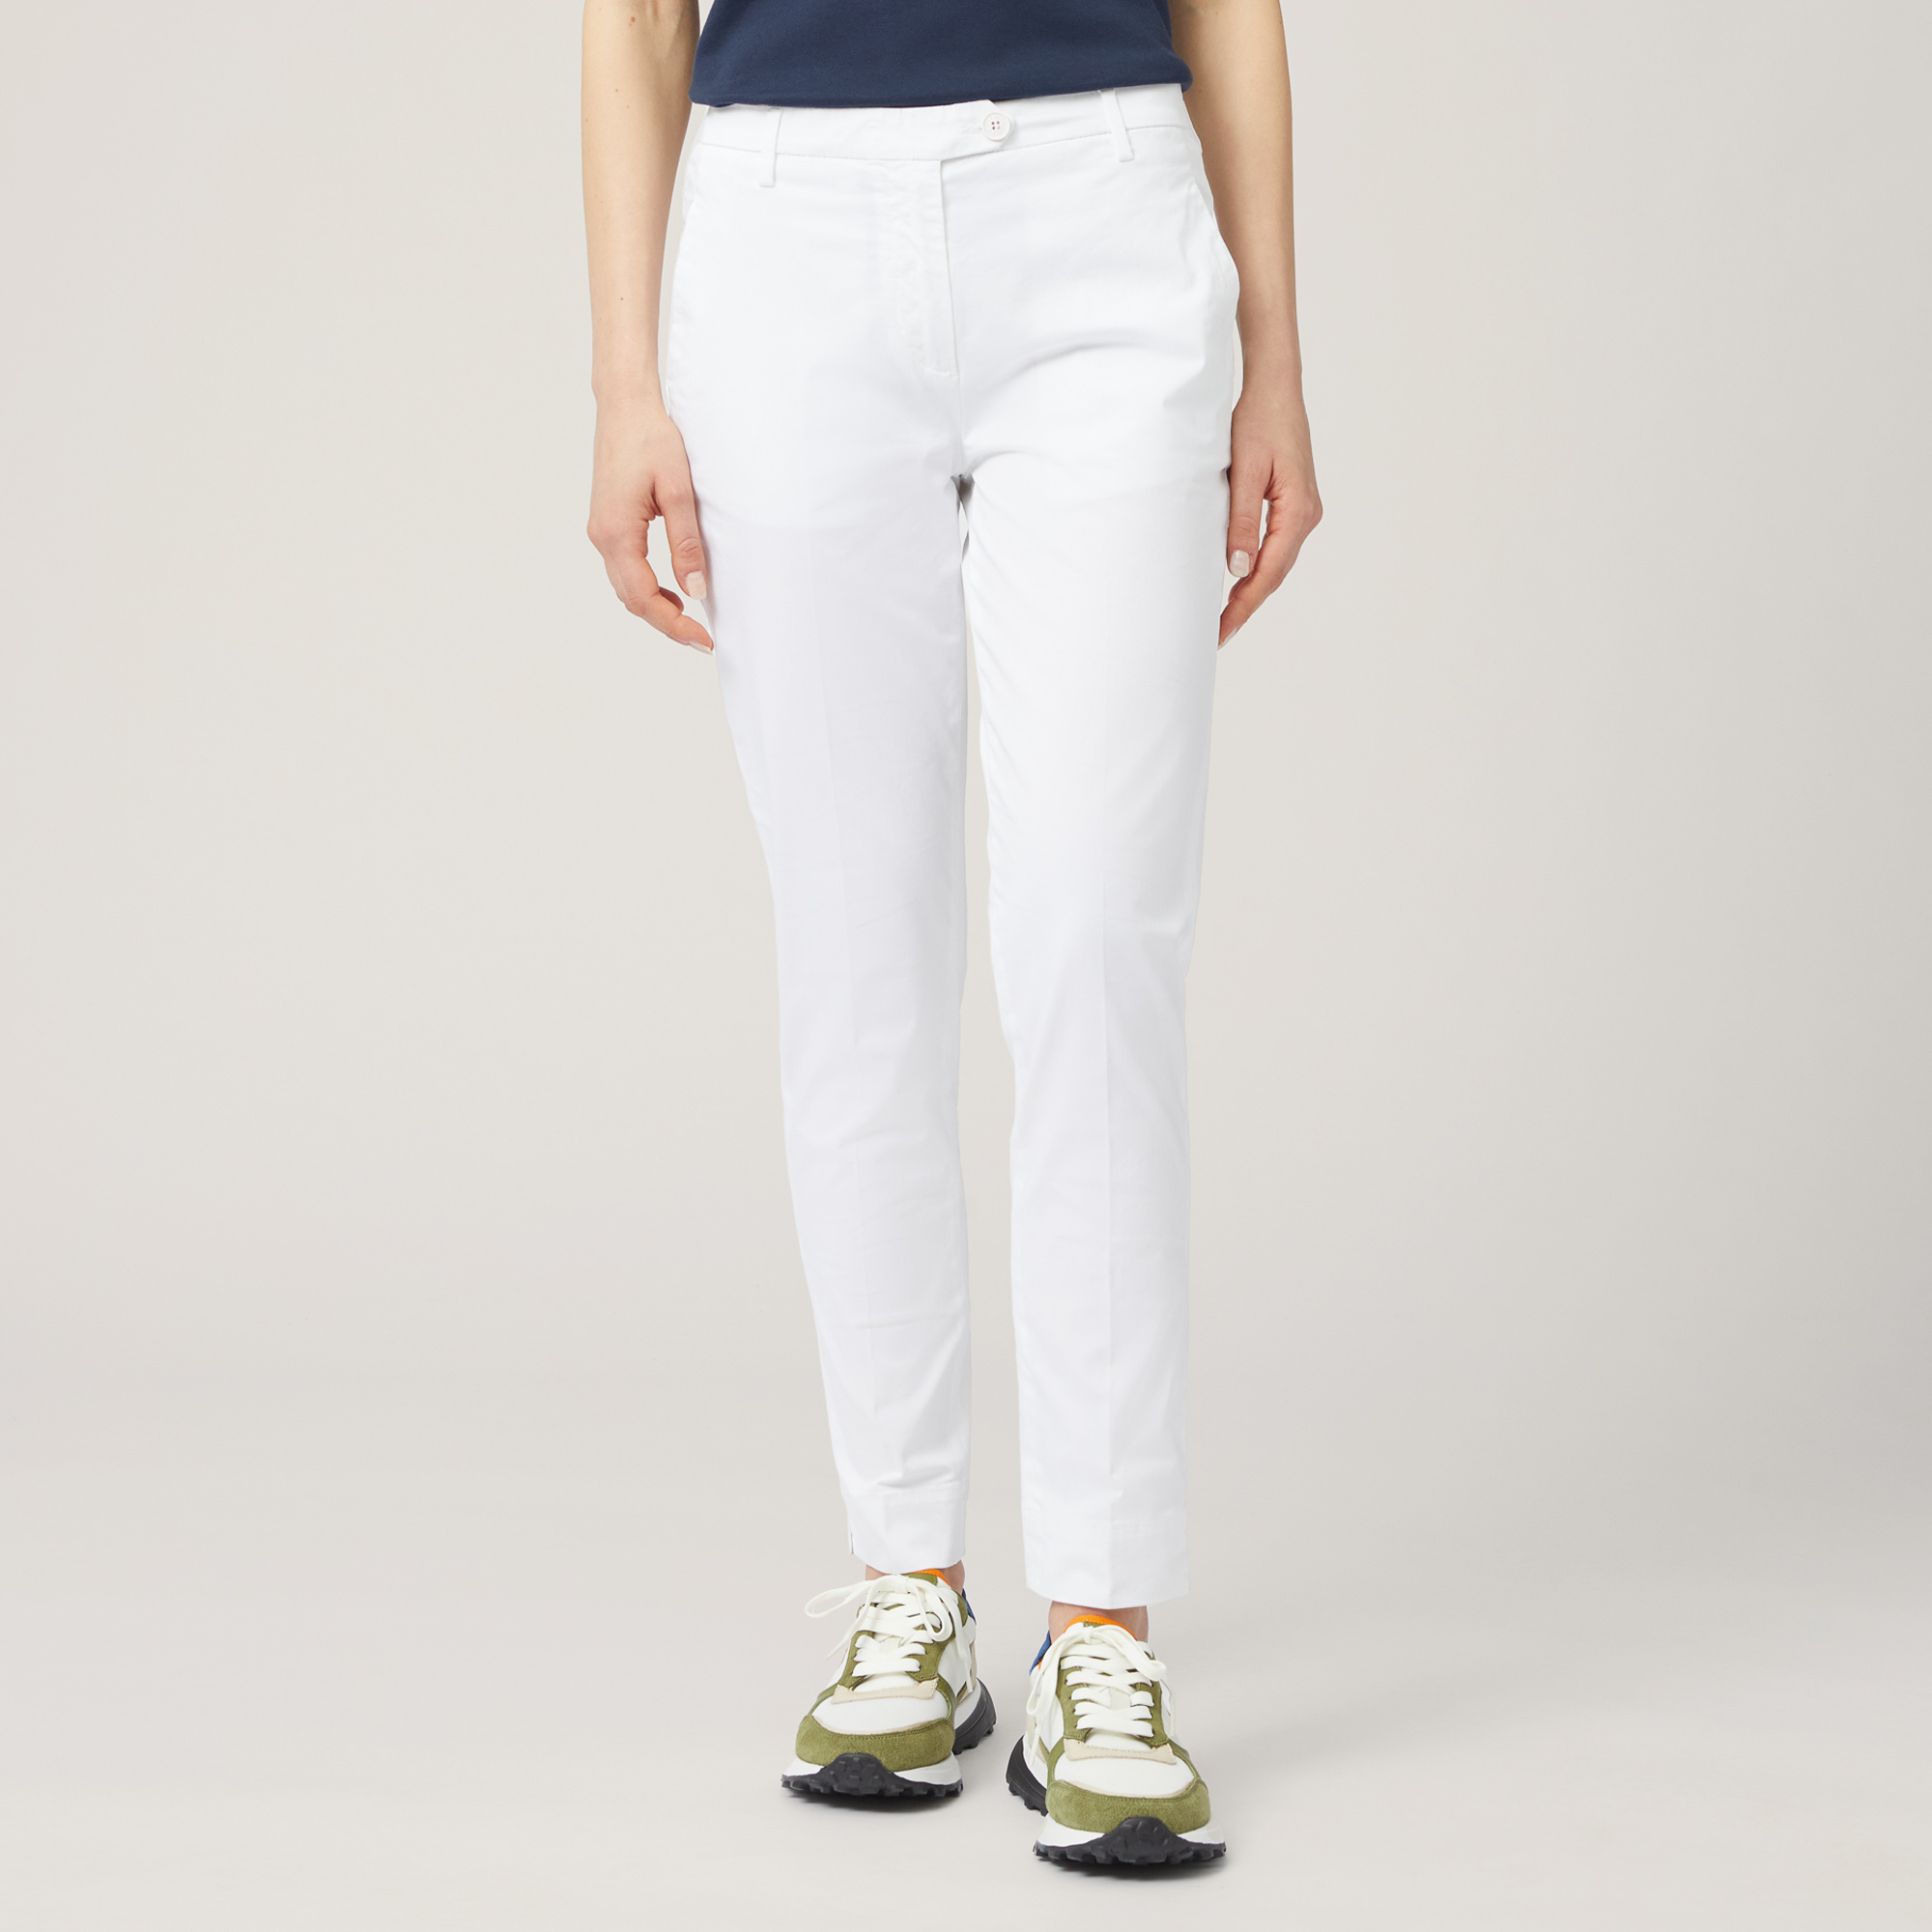 Pantaloni Chino In Raso, Bianco, large